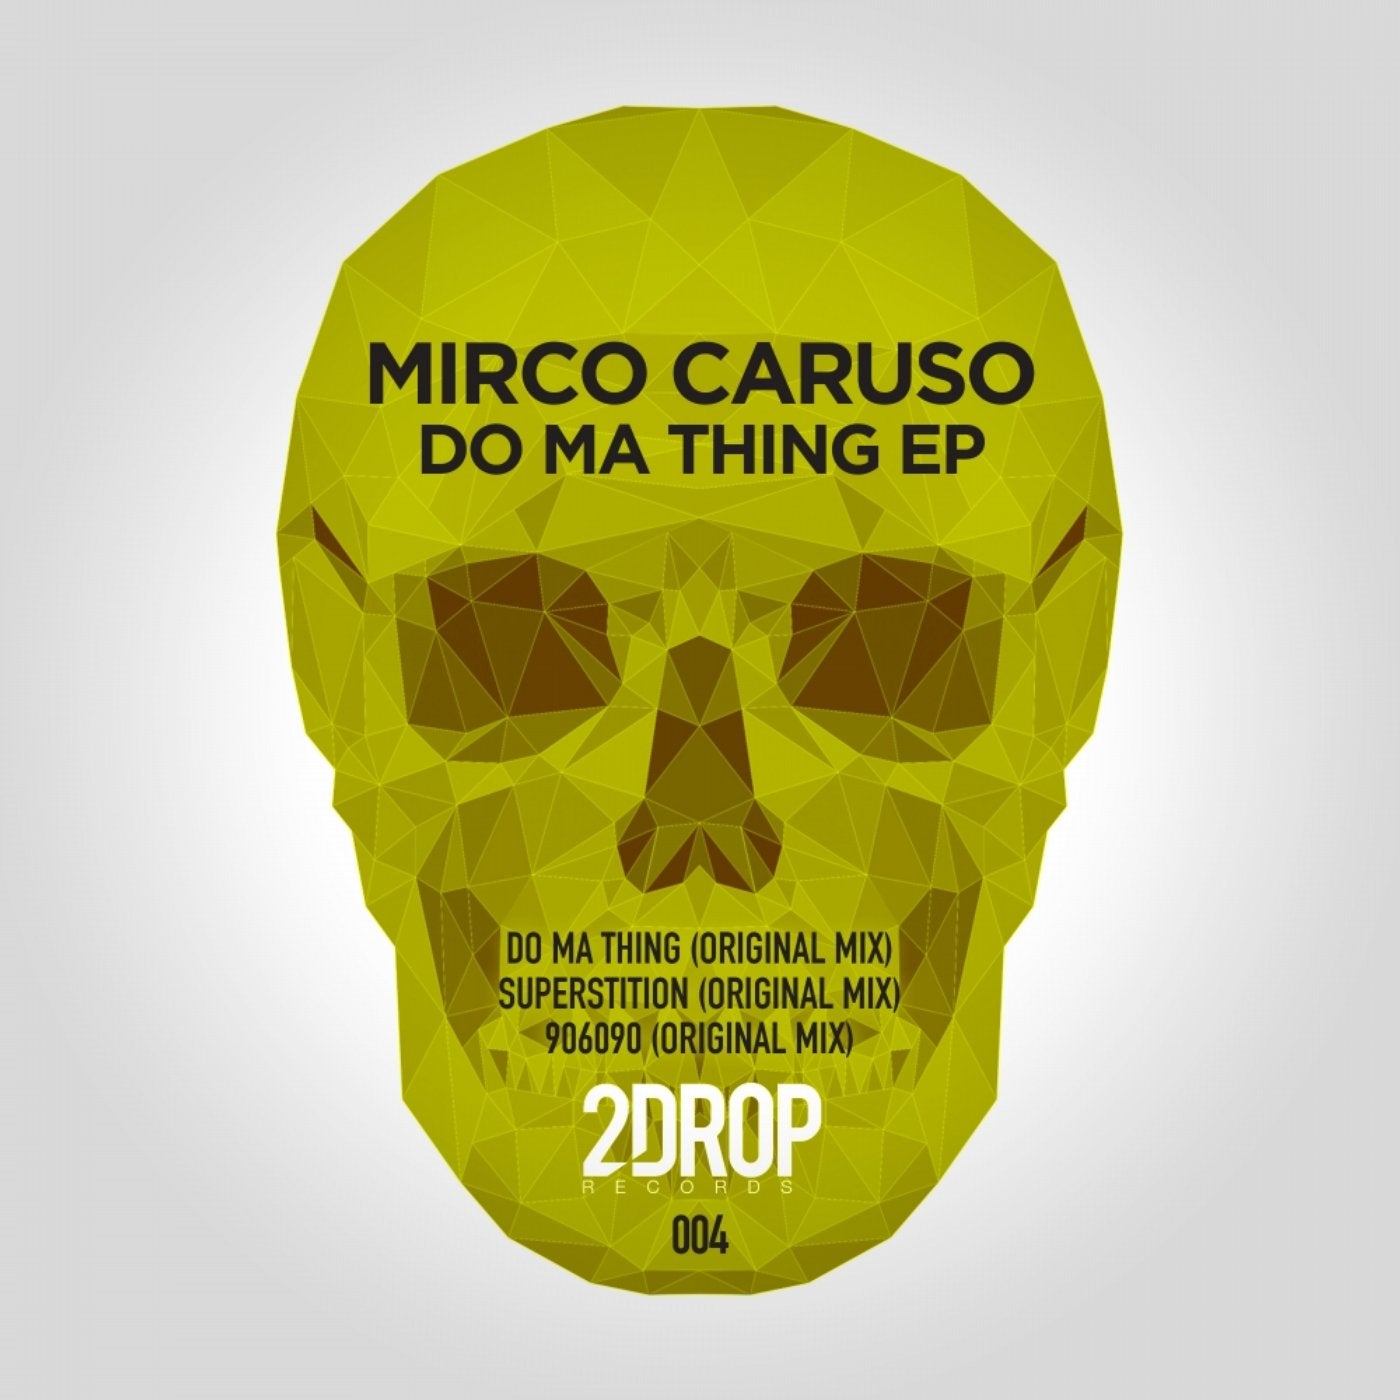 Things original mix. Original Mix. Original things. T+A Caruso. Keep Drop record.